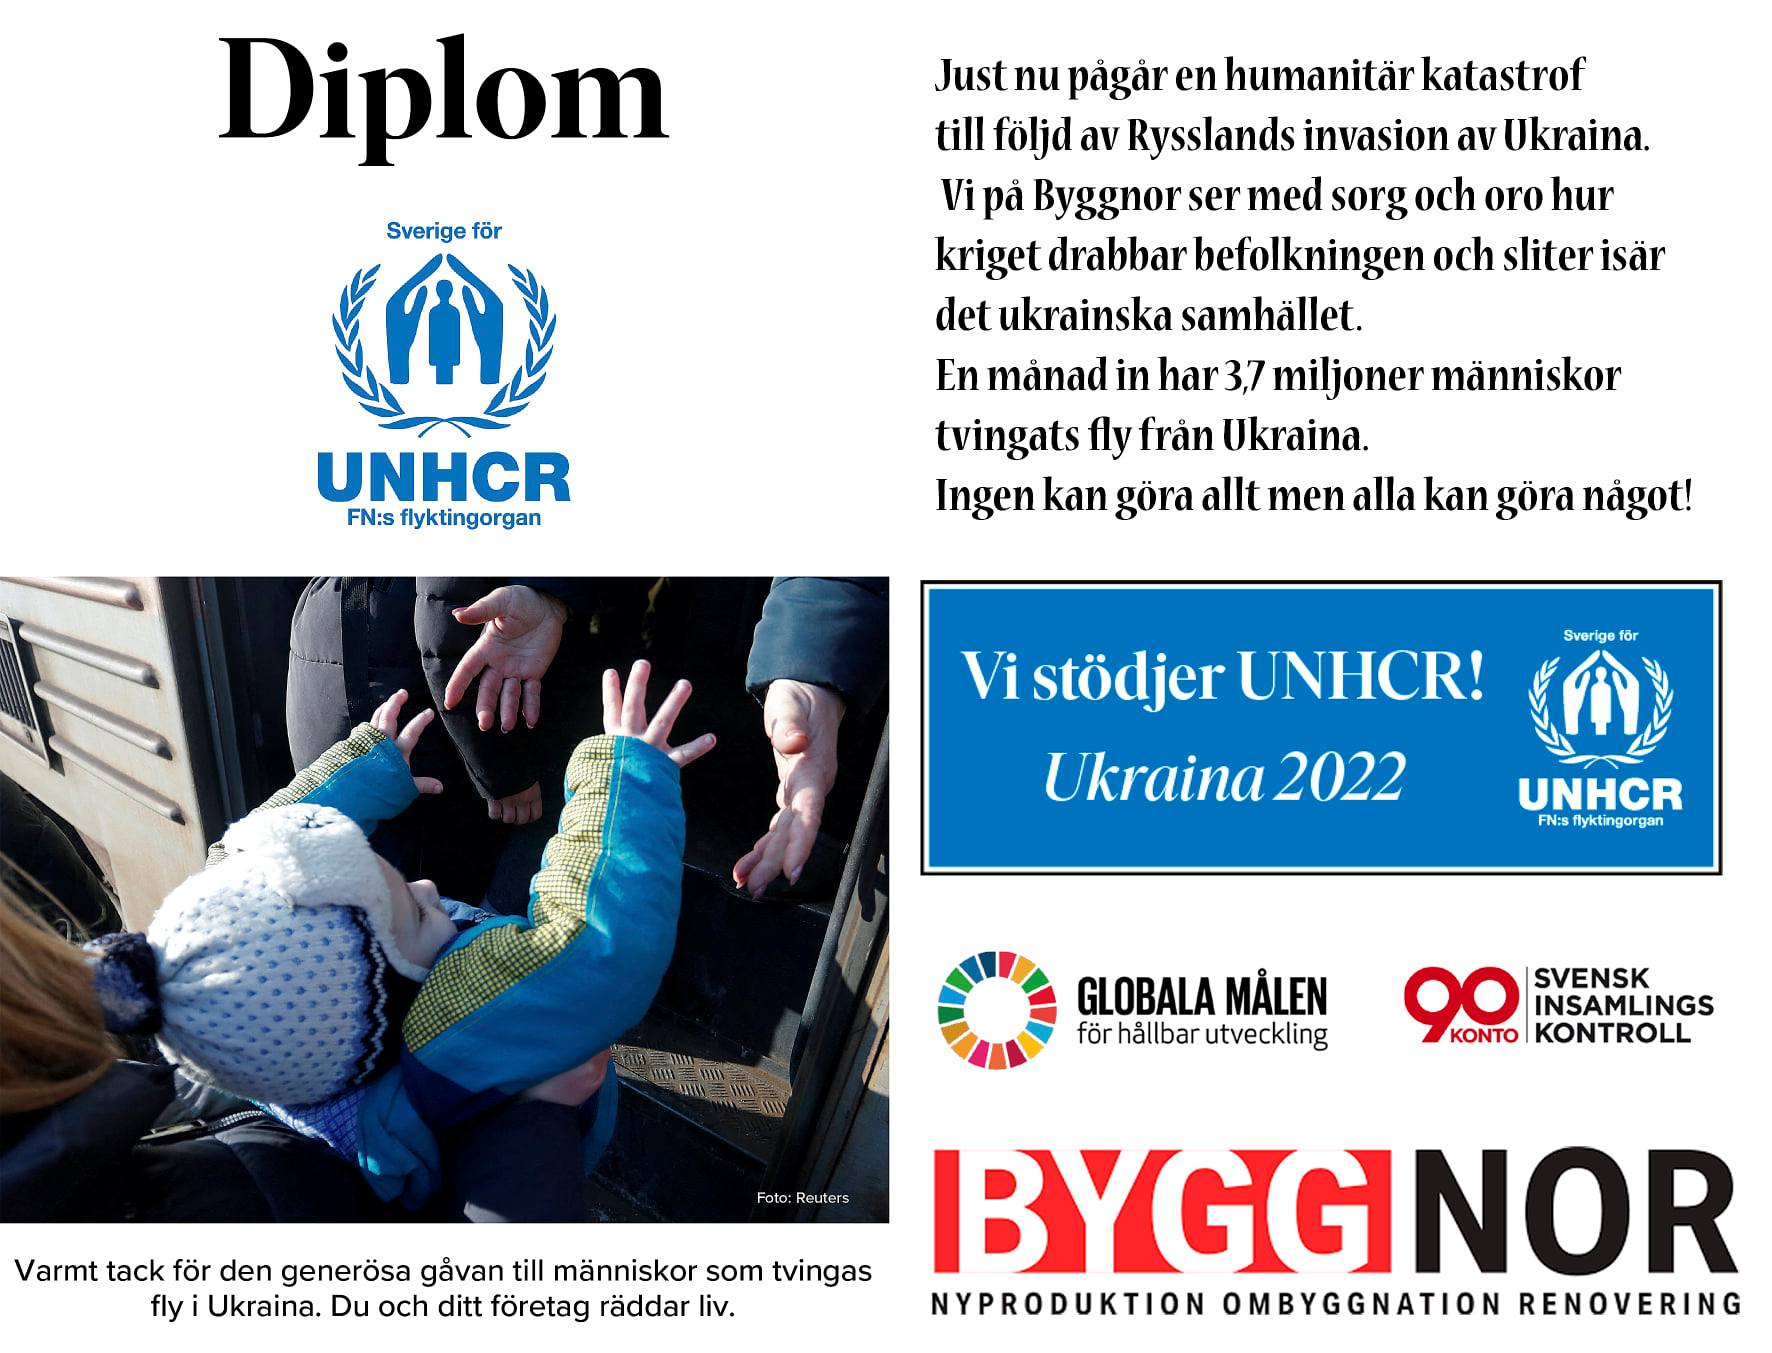 Byggnor stödjer UNHCR